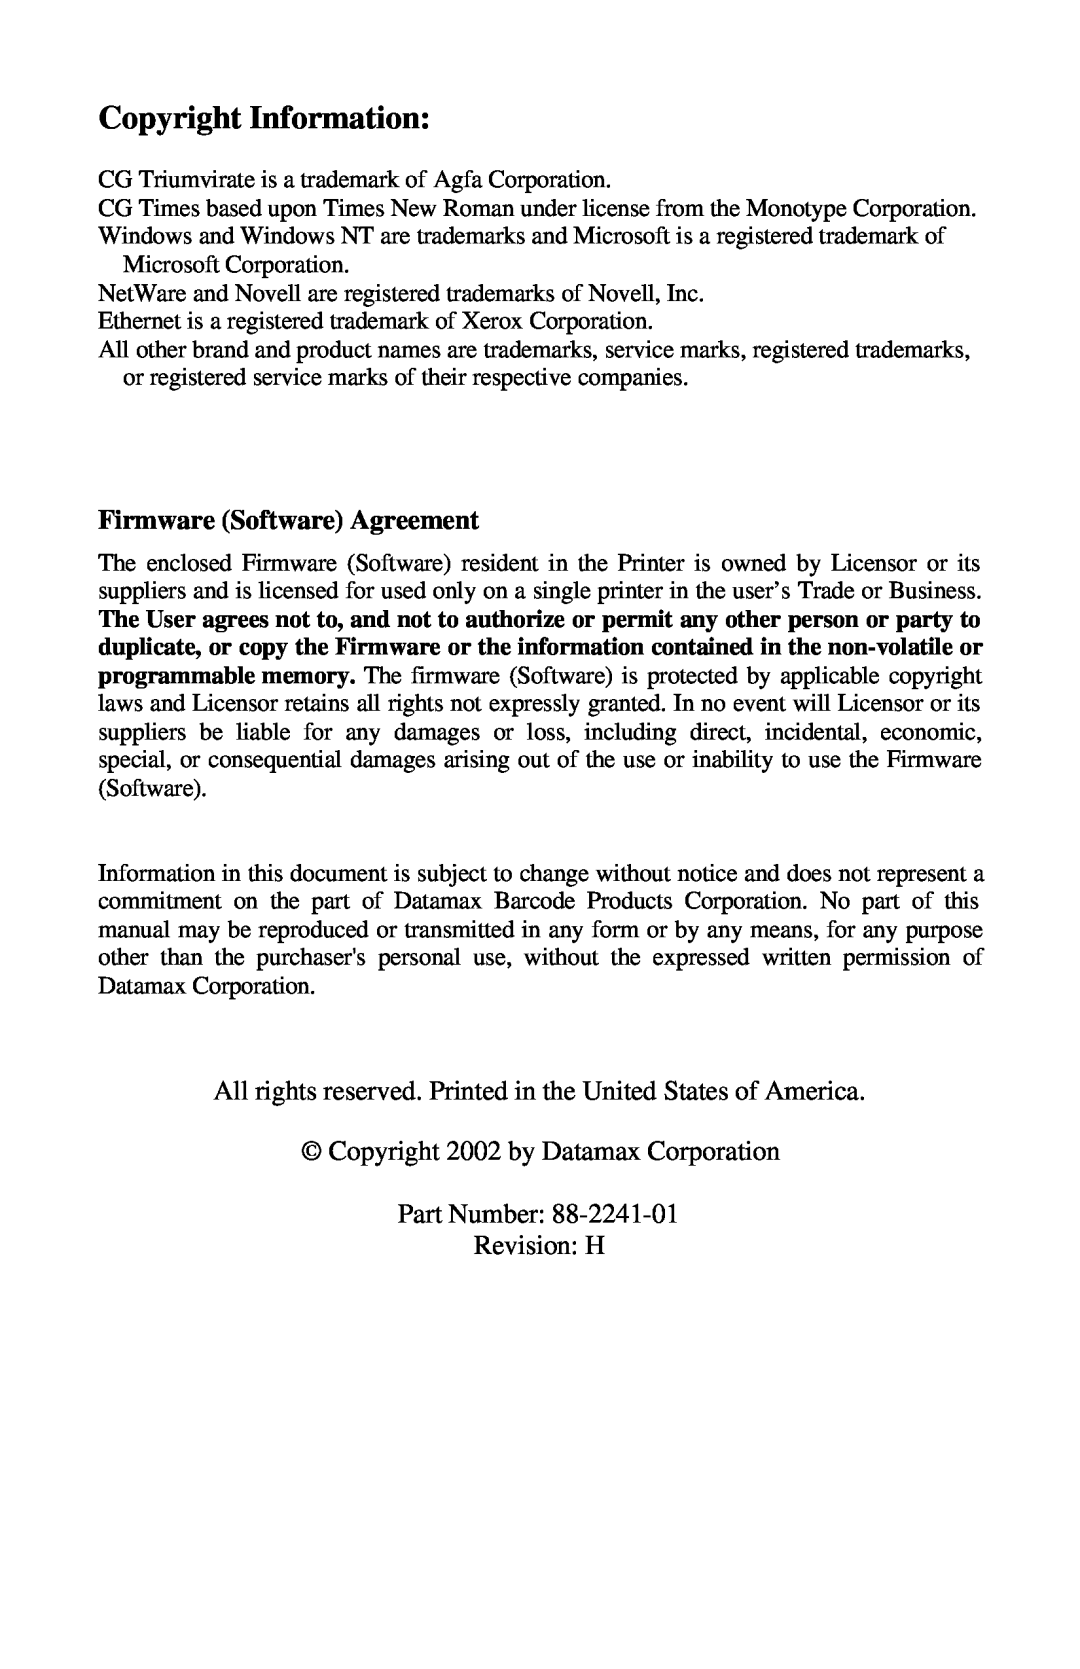 Xerox I Class manual Copyright Information, Firmware Software Agreement 